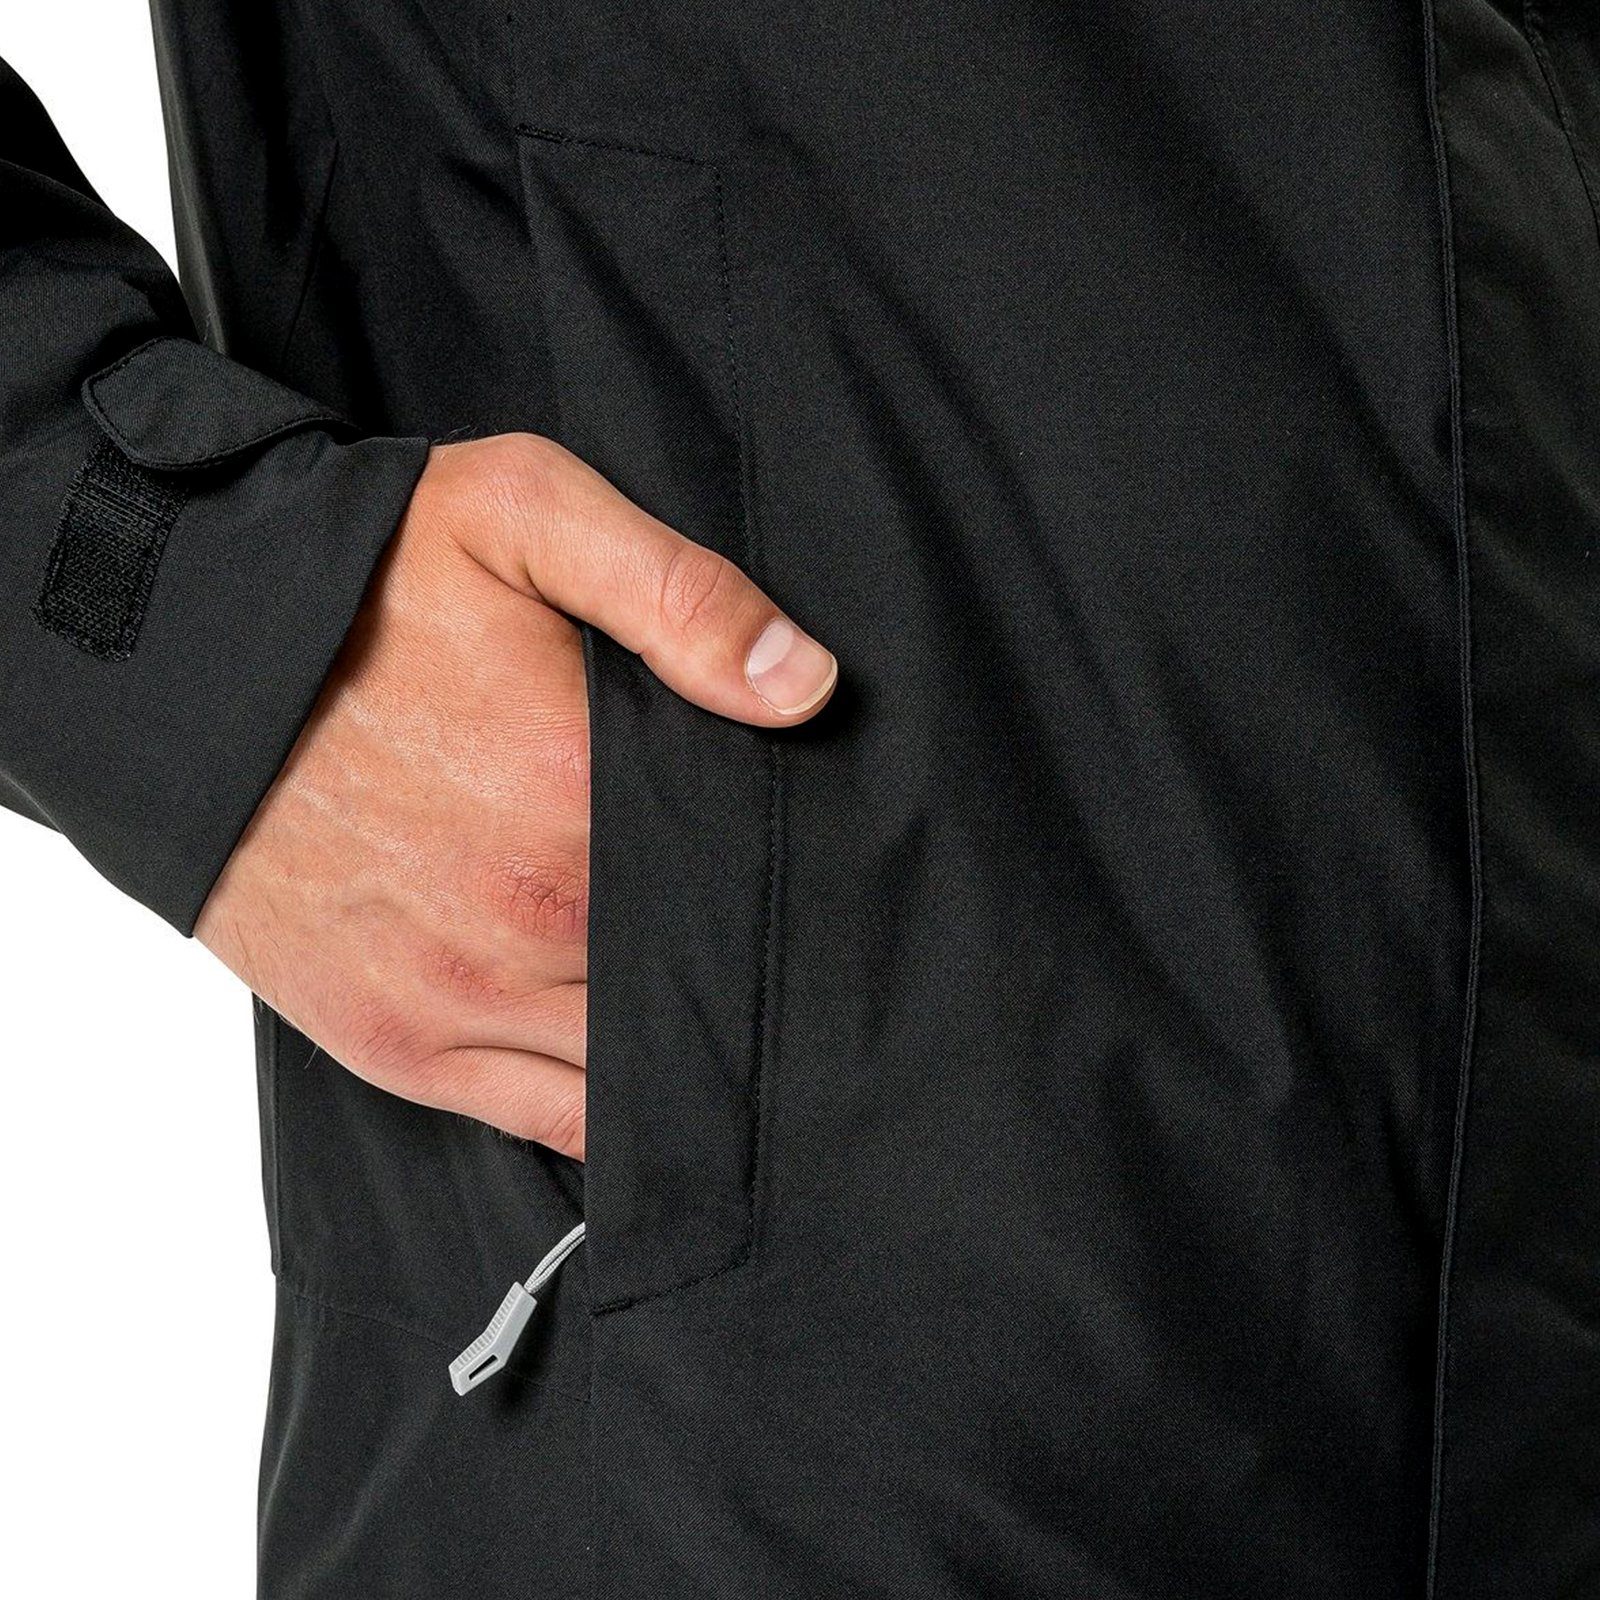 VAUDE Winterjacke Jacket Padded verstellbarer black Rosemoor Kapuze mit